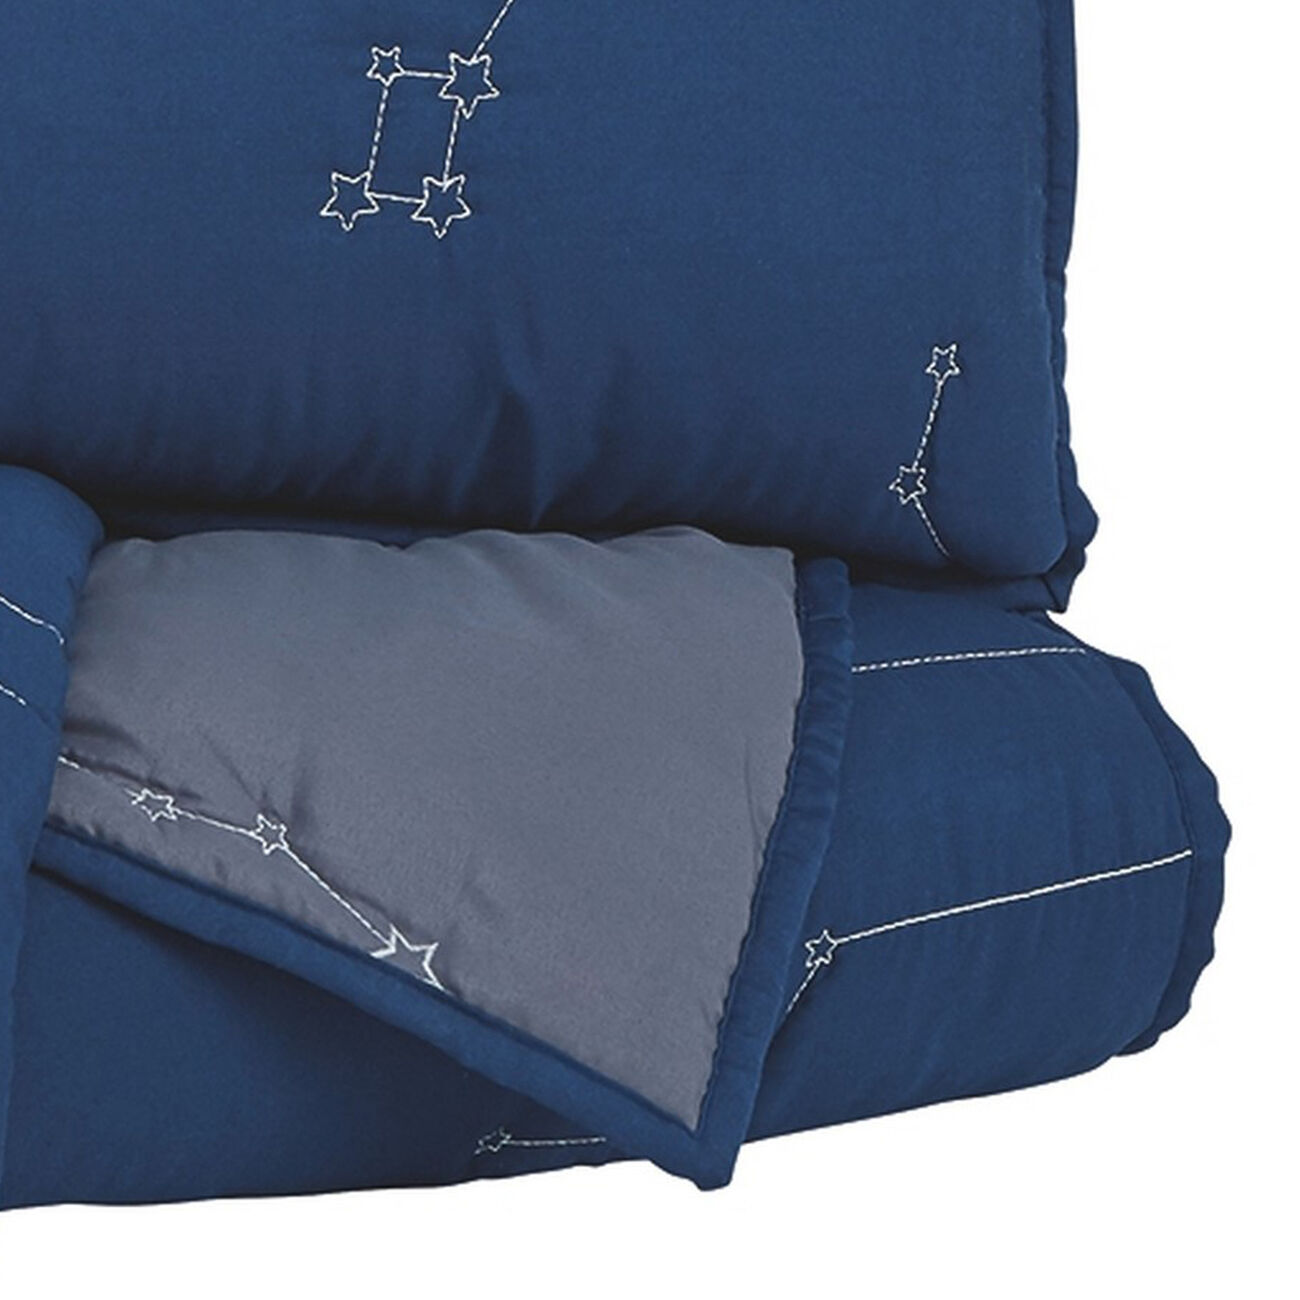 Constellation Theme Full Size Fabric Comforter set with 1 Sham, Blue